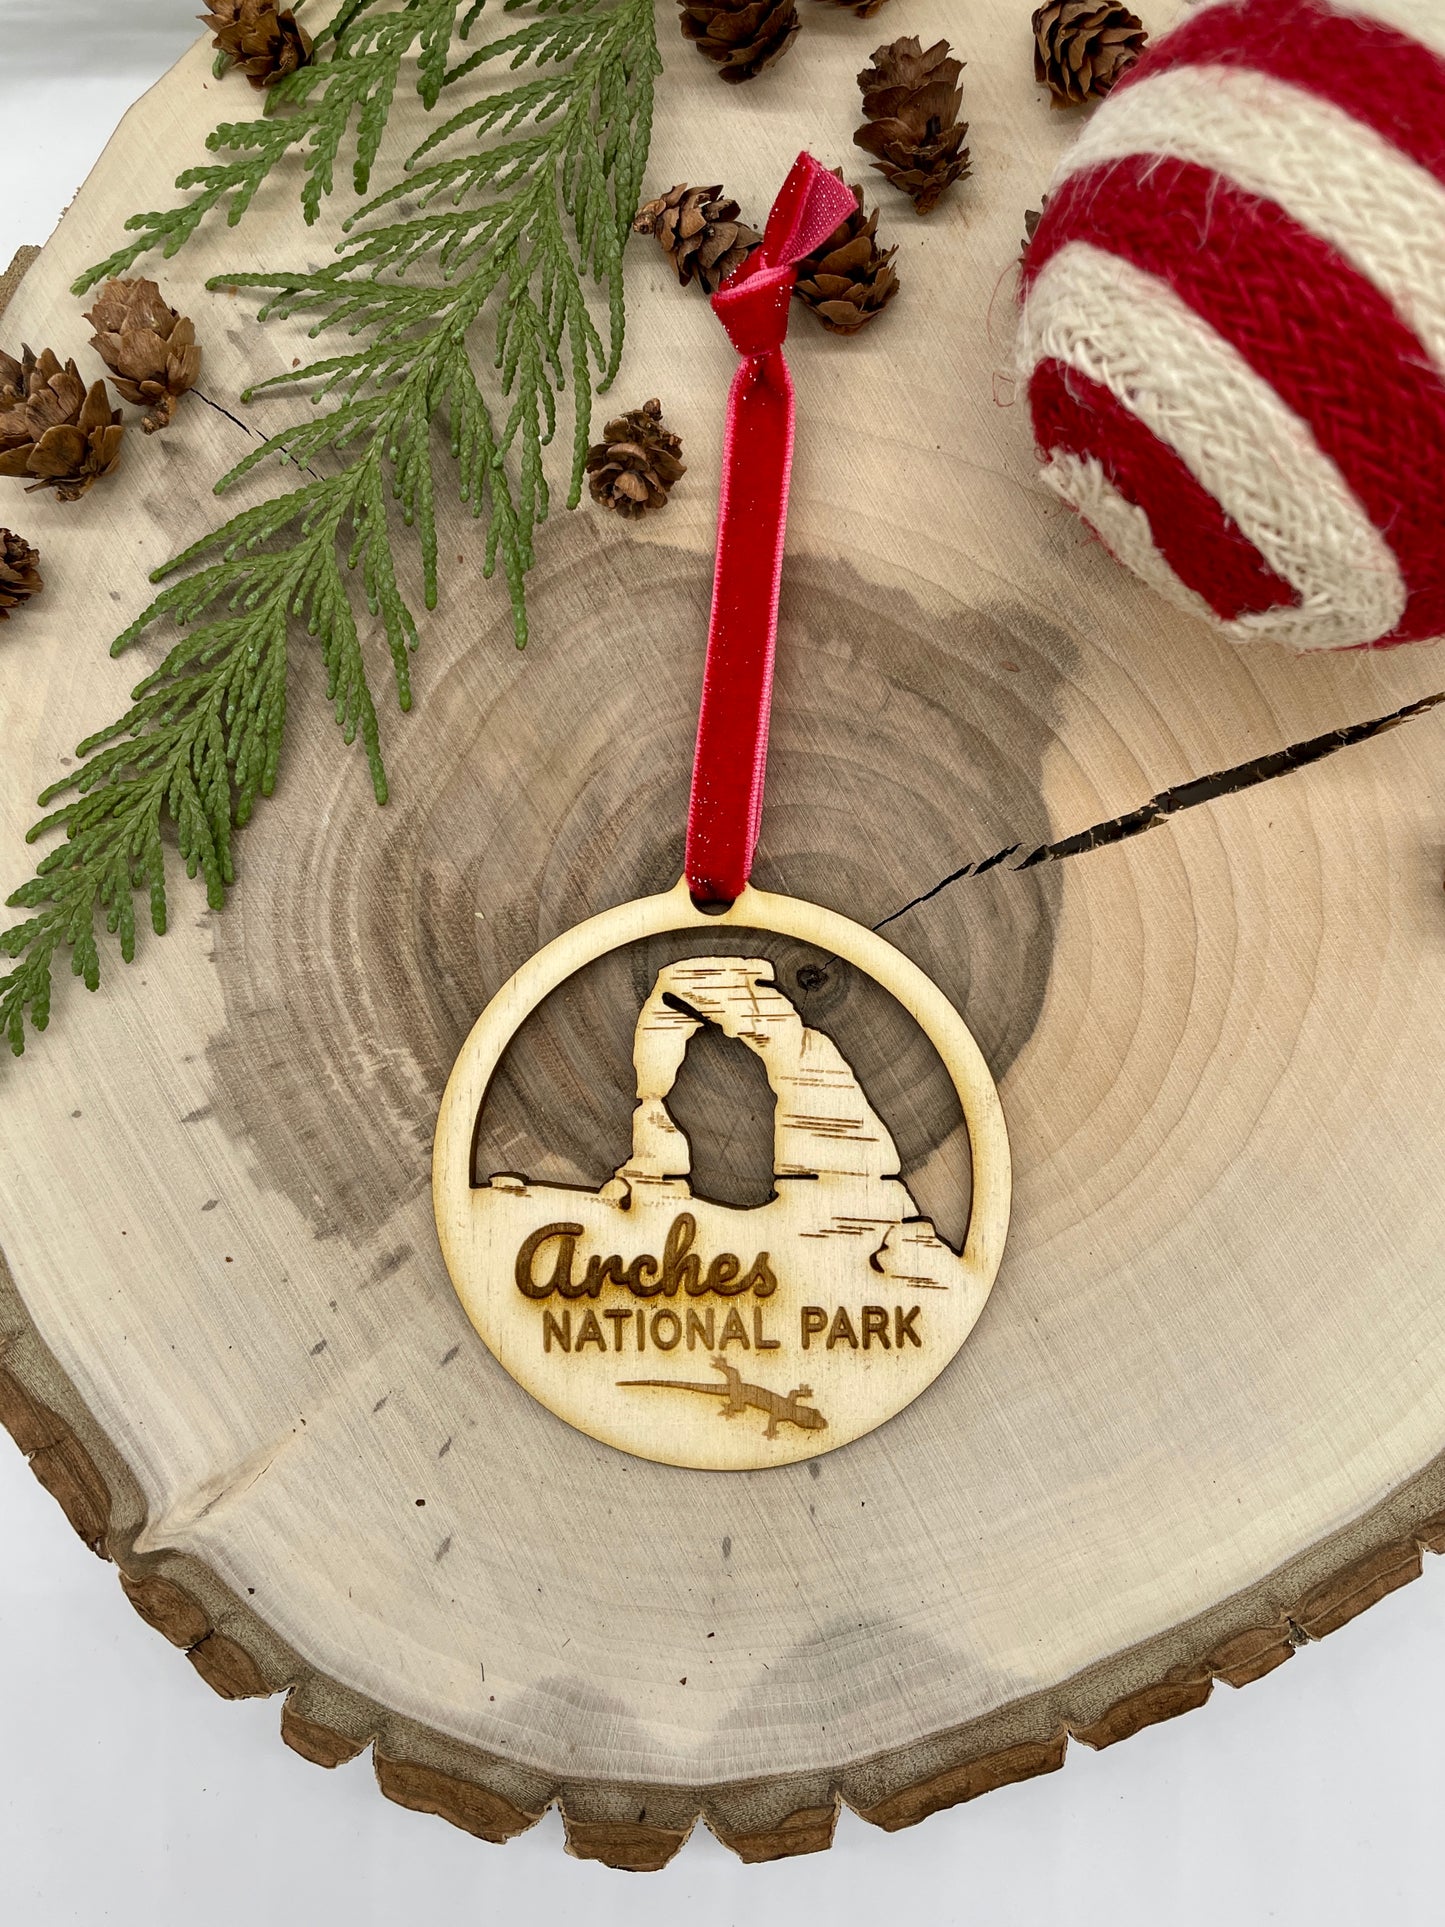 Arches National Park Christmas ornament